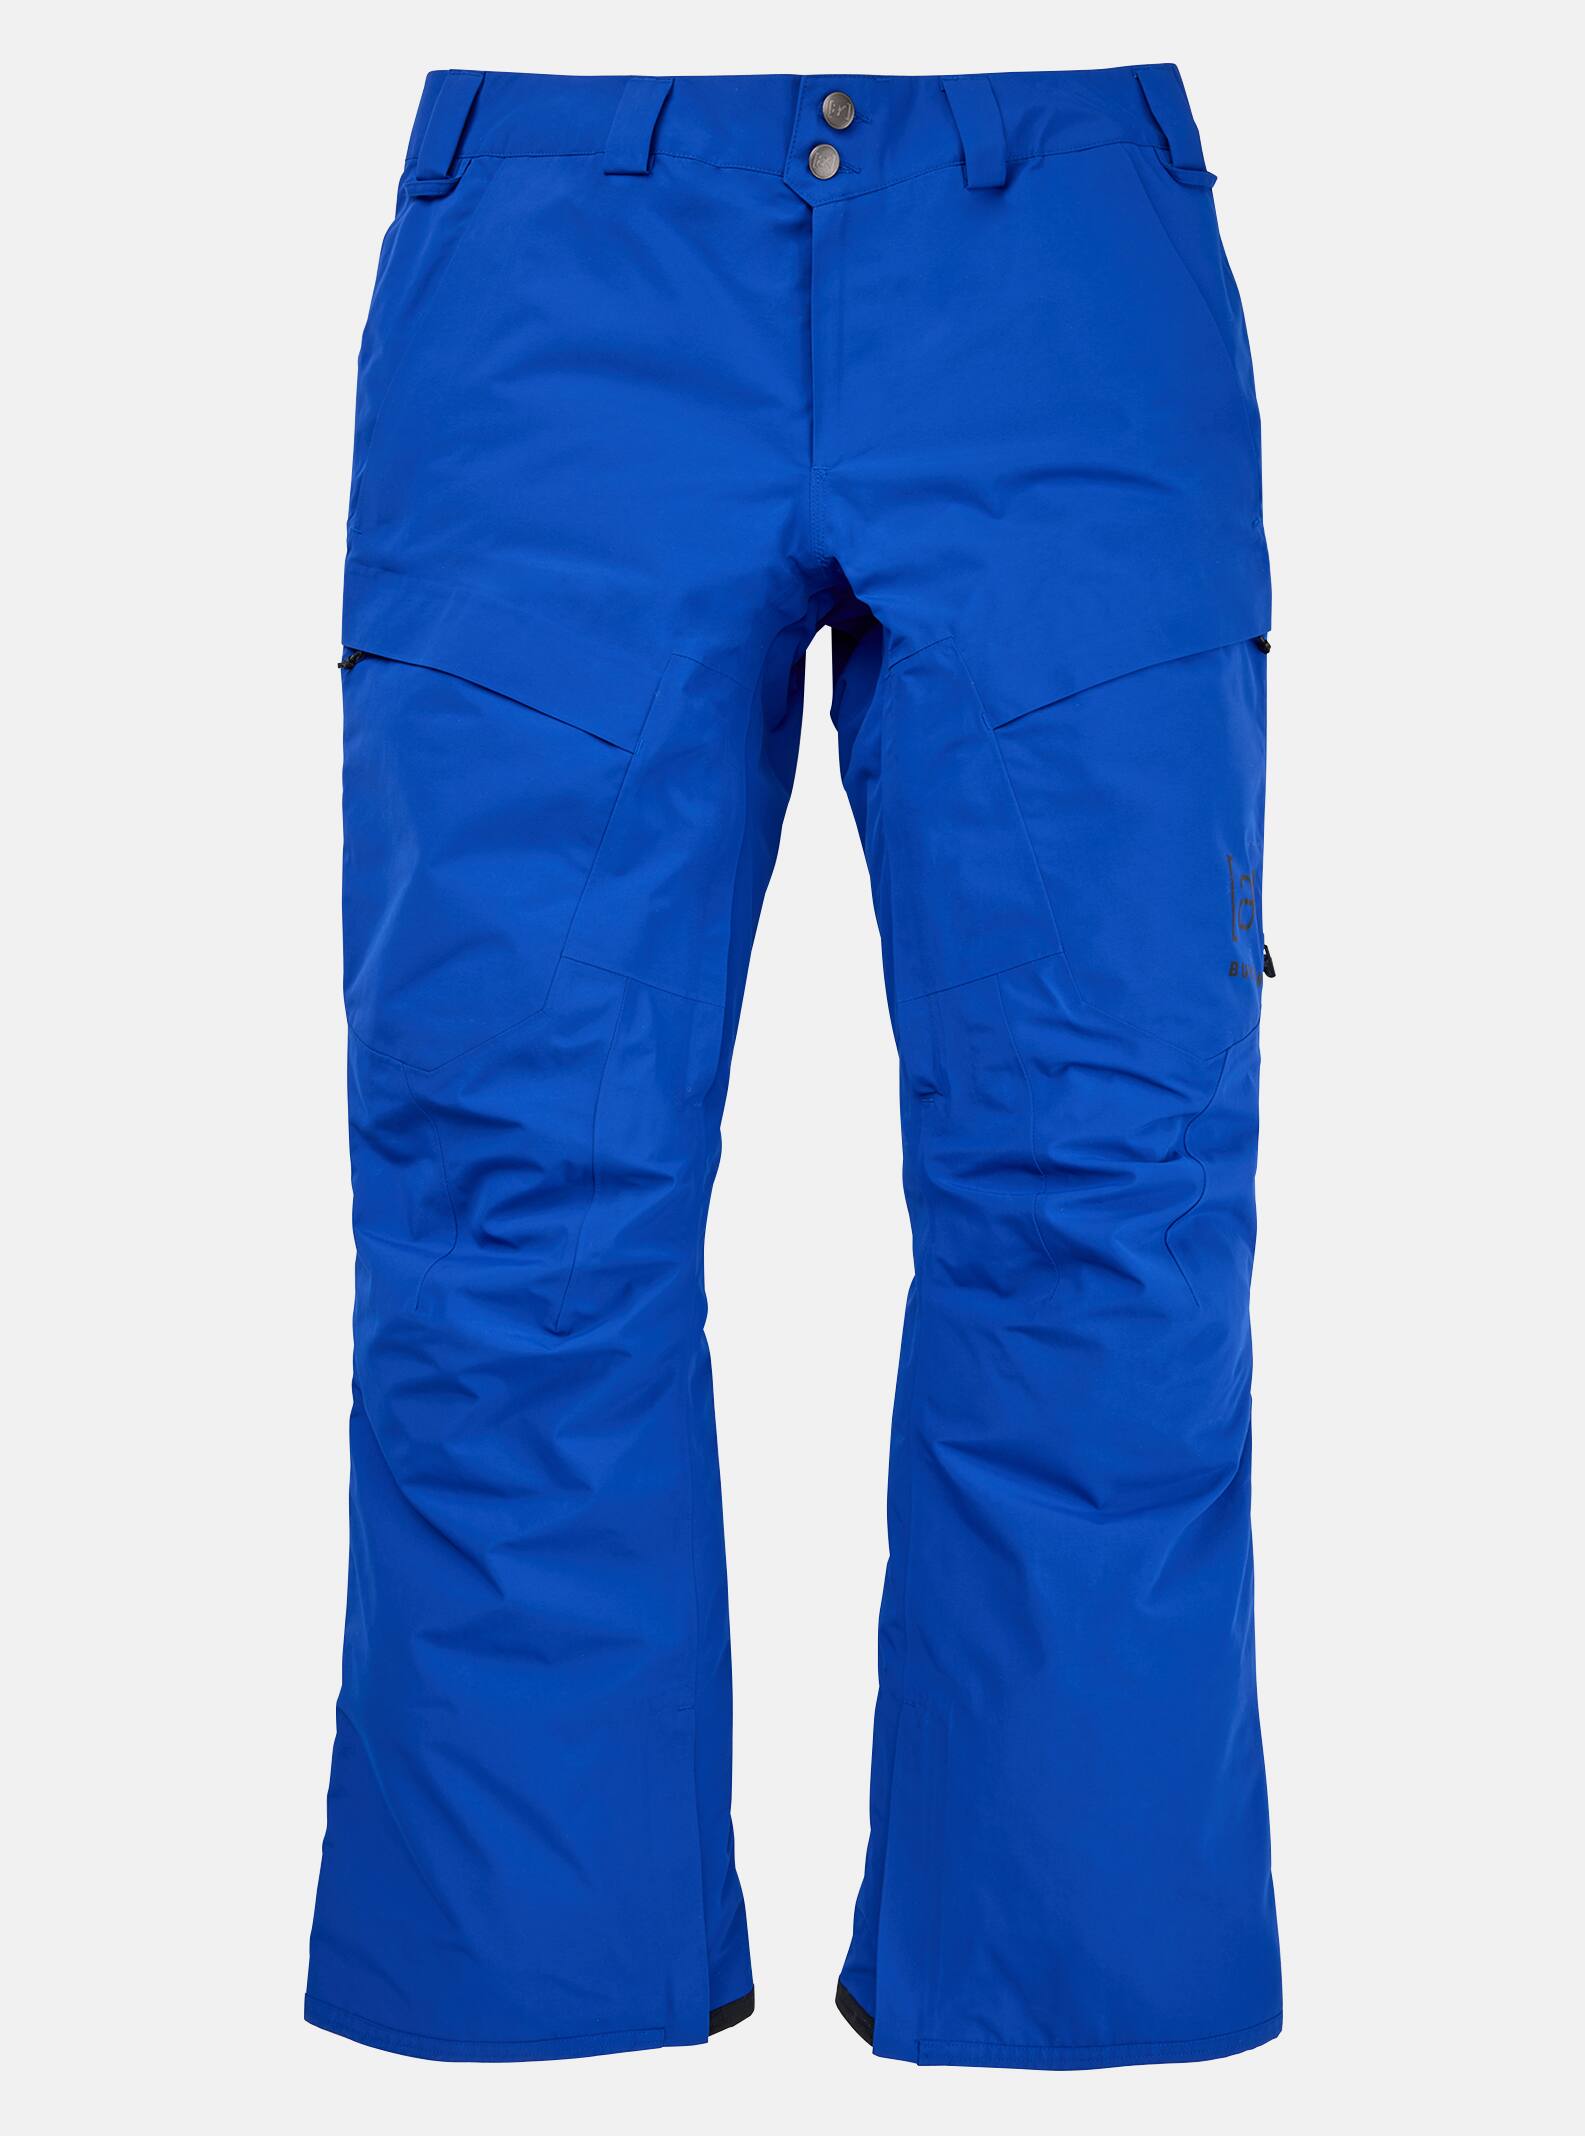 Burton AK Swash GORE-TEX 2L Pants サイズXL ウエア/装備(男性用) スノーボード スポーツ・レジャー 新品入荷